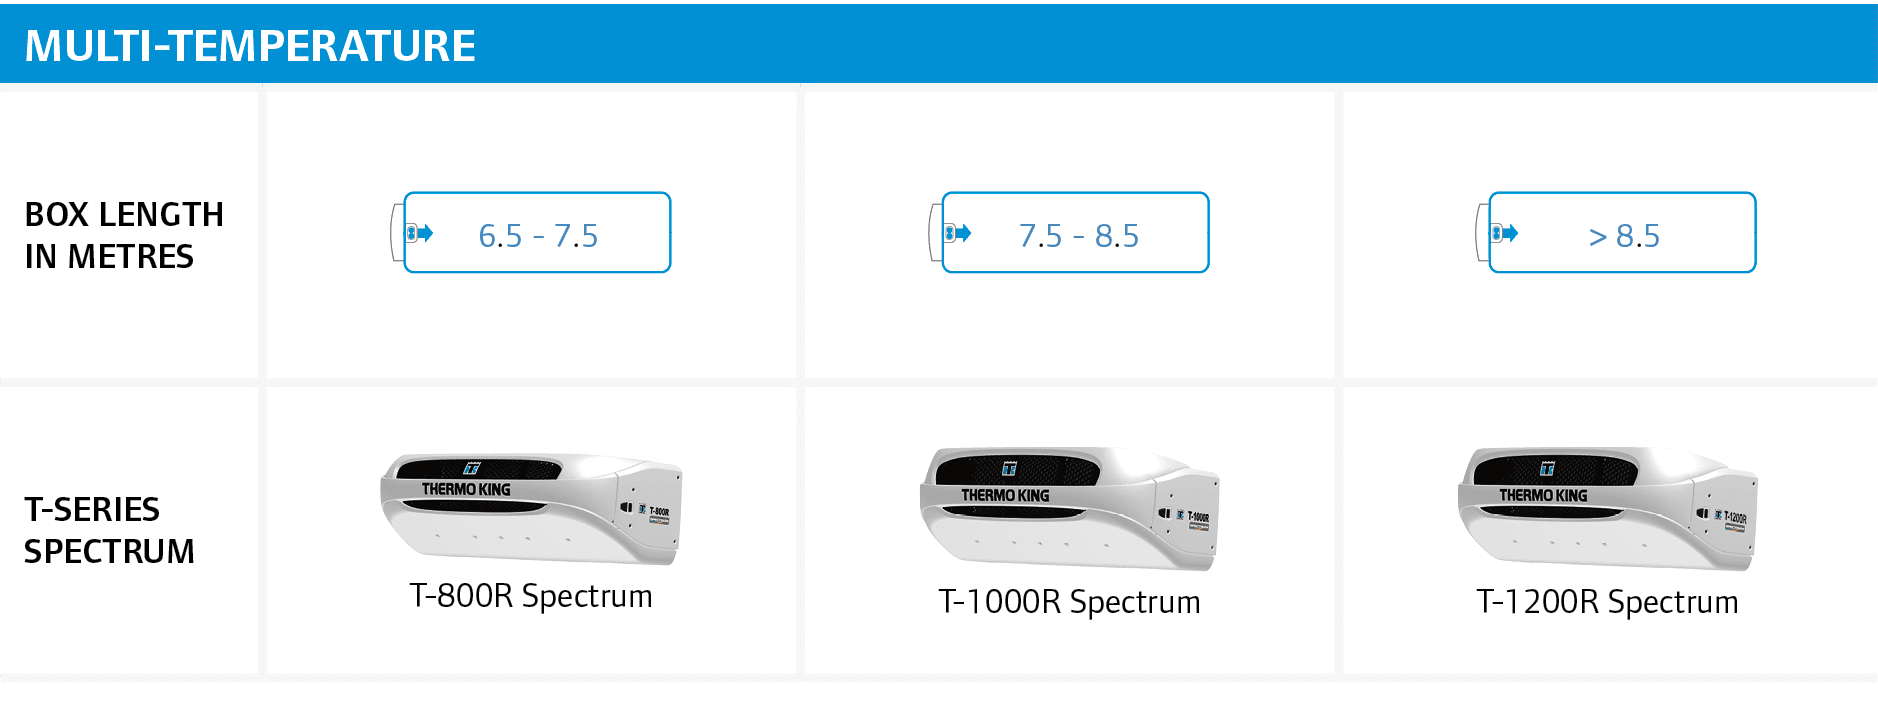 multi-temperature,Box length in metres, , , ,T-Series Spectrum, T-800R Spectrum, T-1000R Spectrum, T-1200R Spectrum